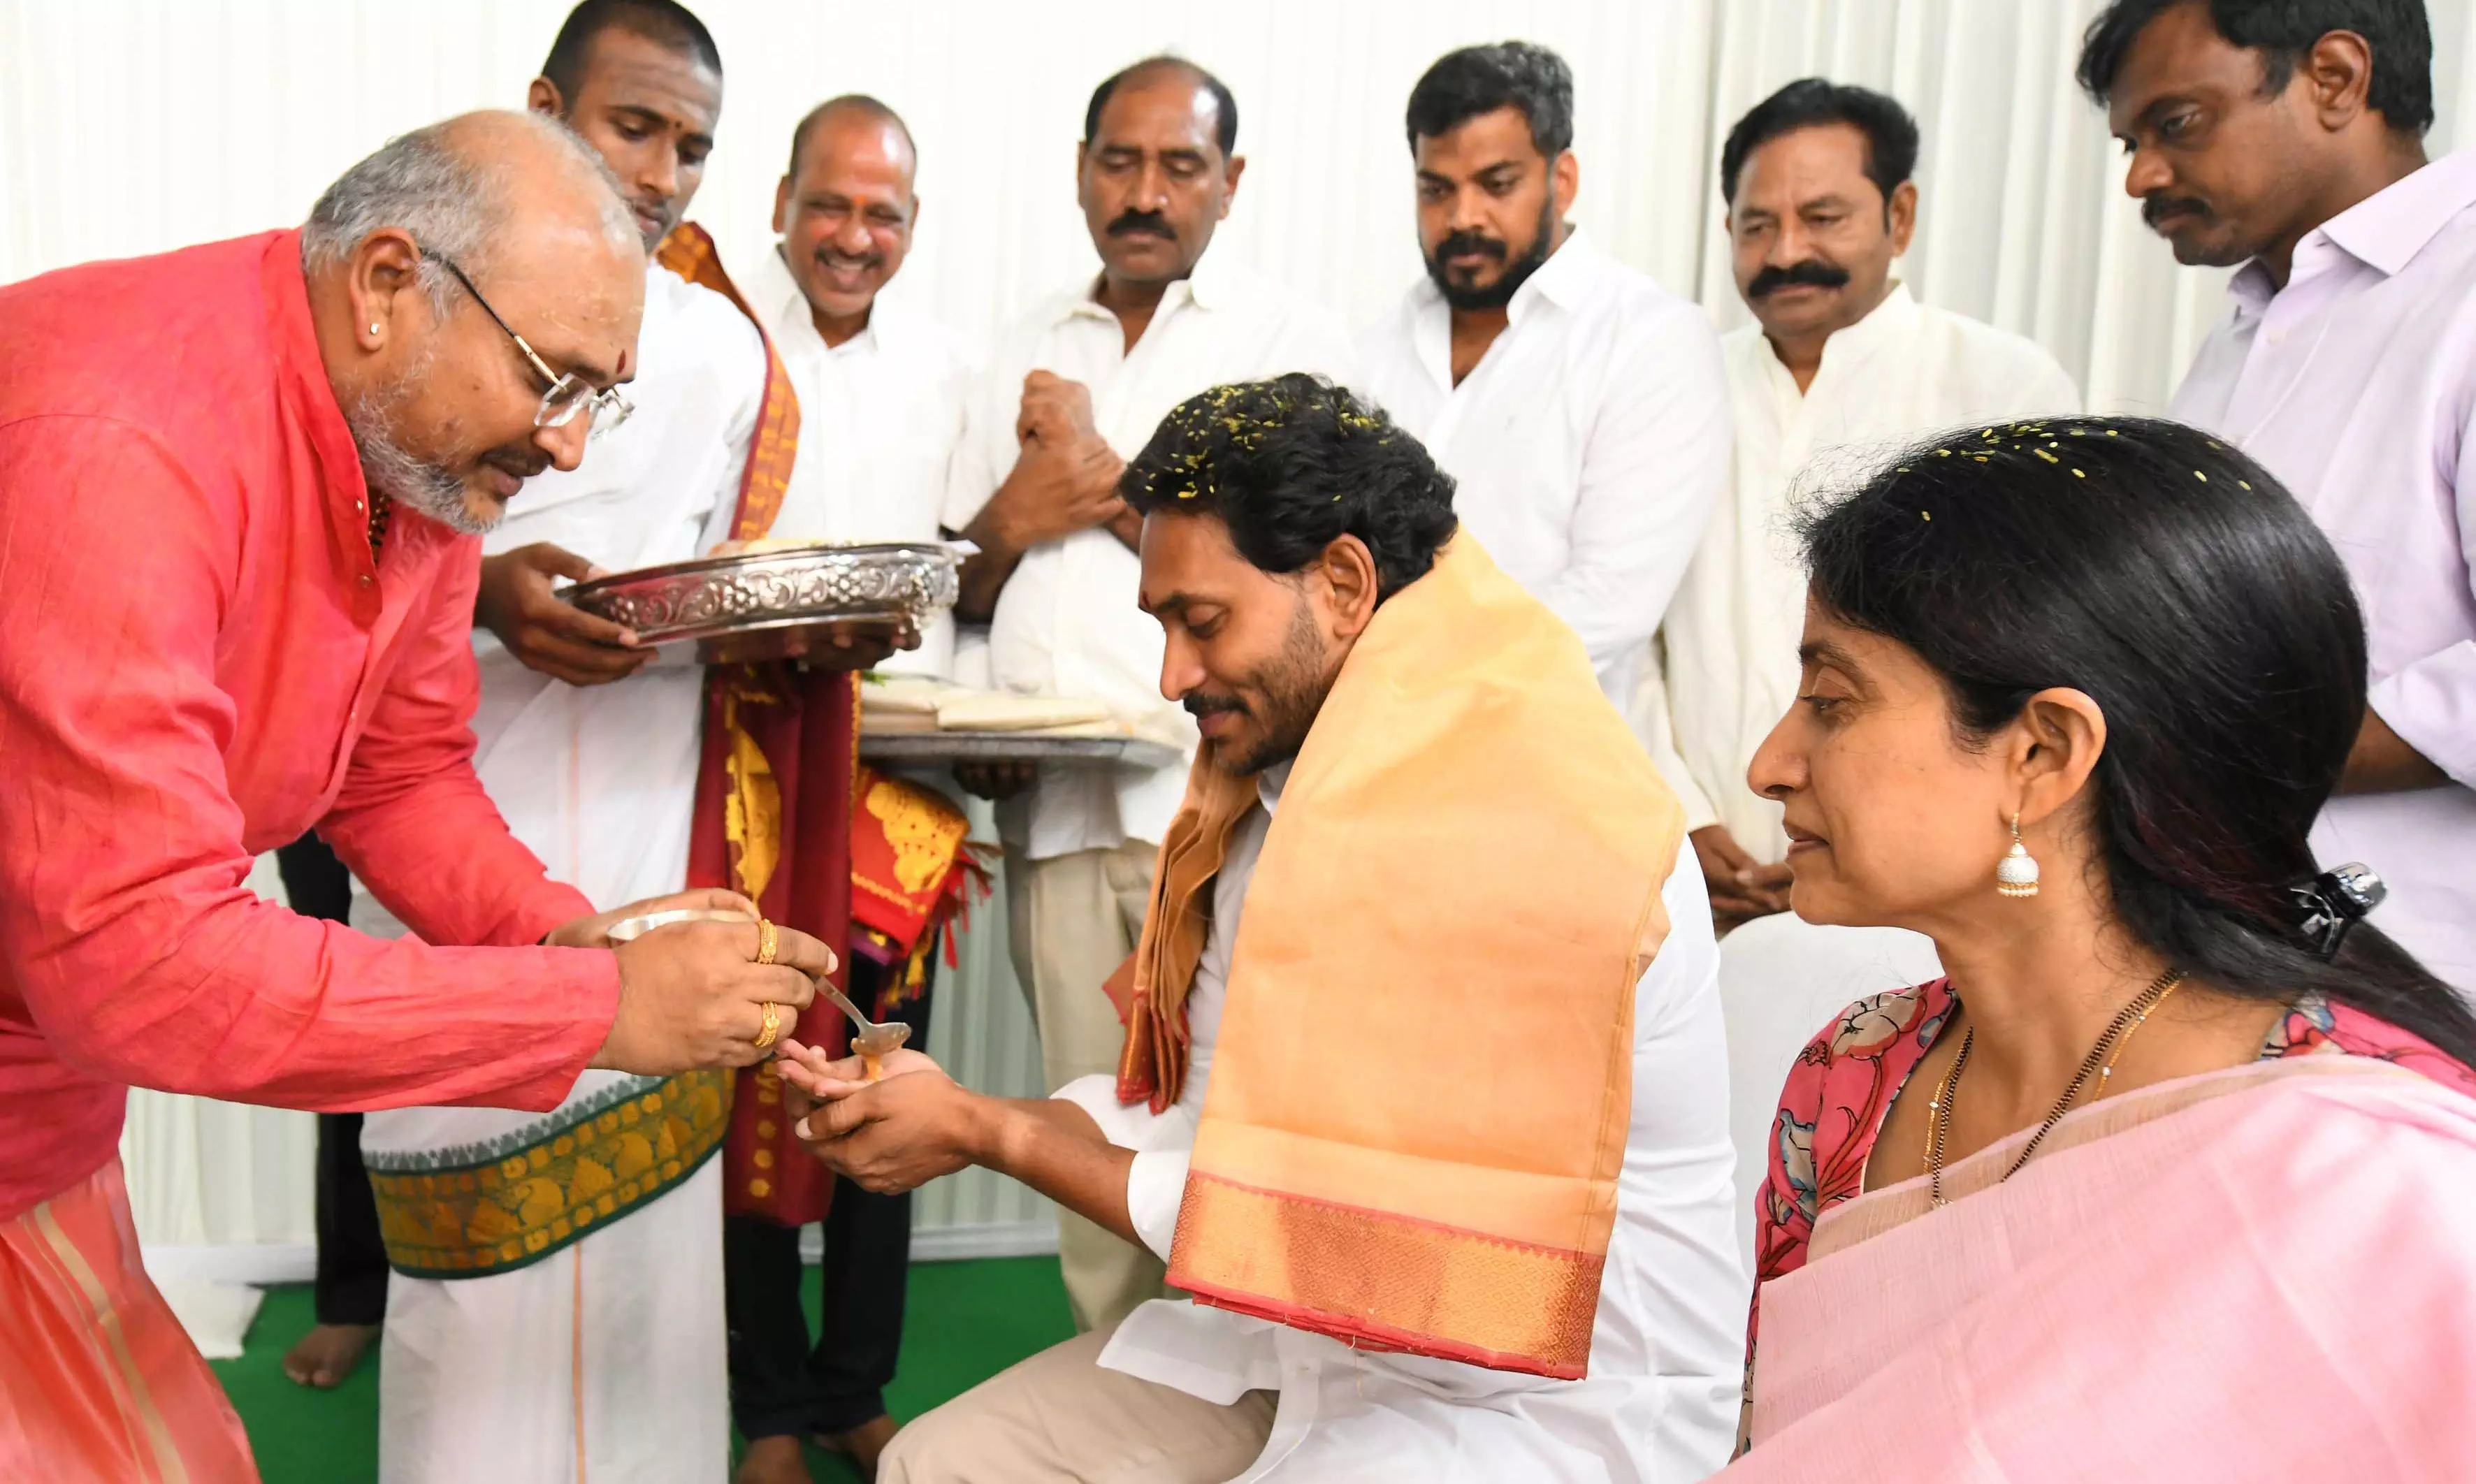 CM Jagan wishes all on Krodhi Ugadi Telugu New Year